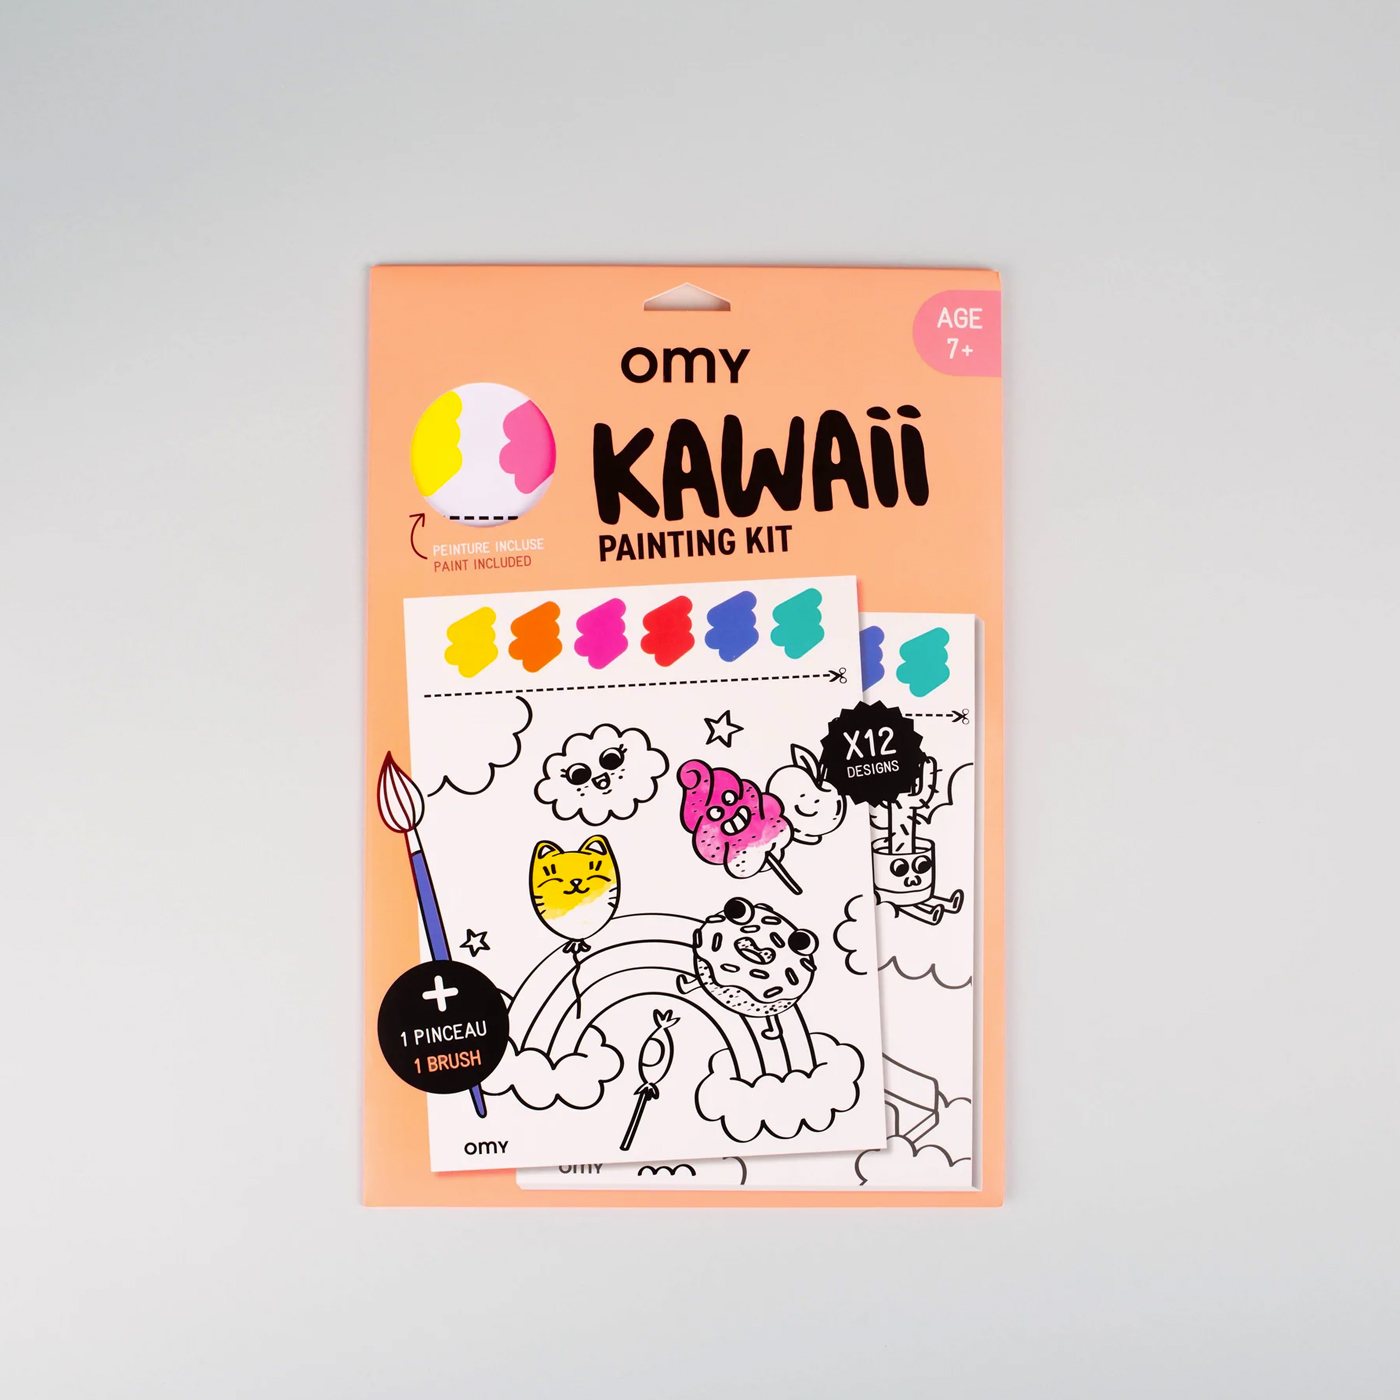  Omy Painting Kit  | Kawaii